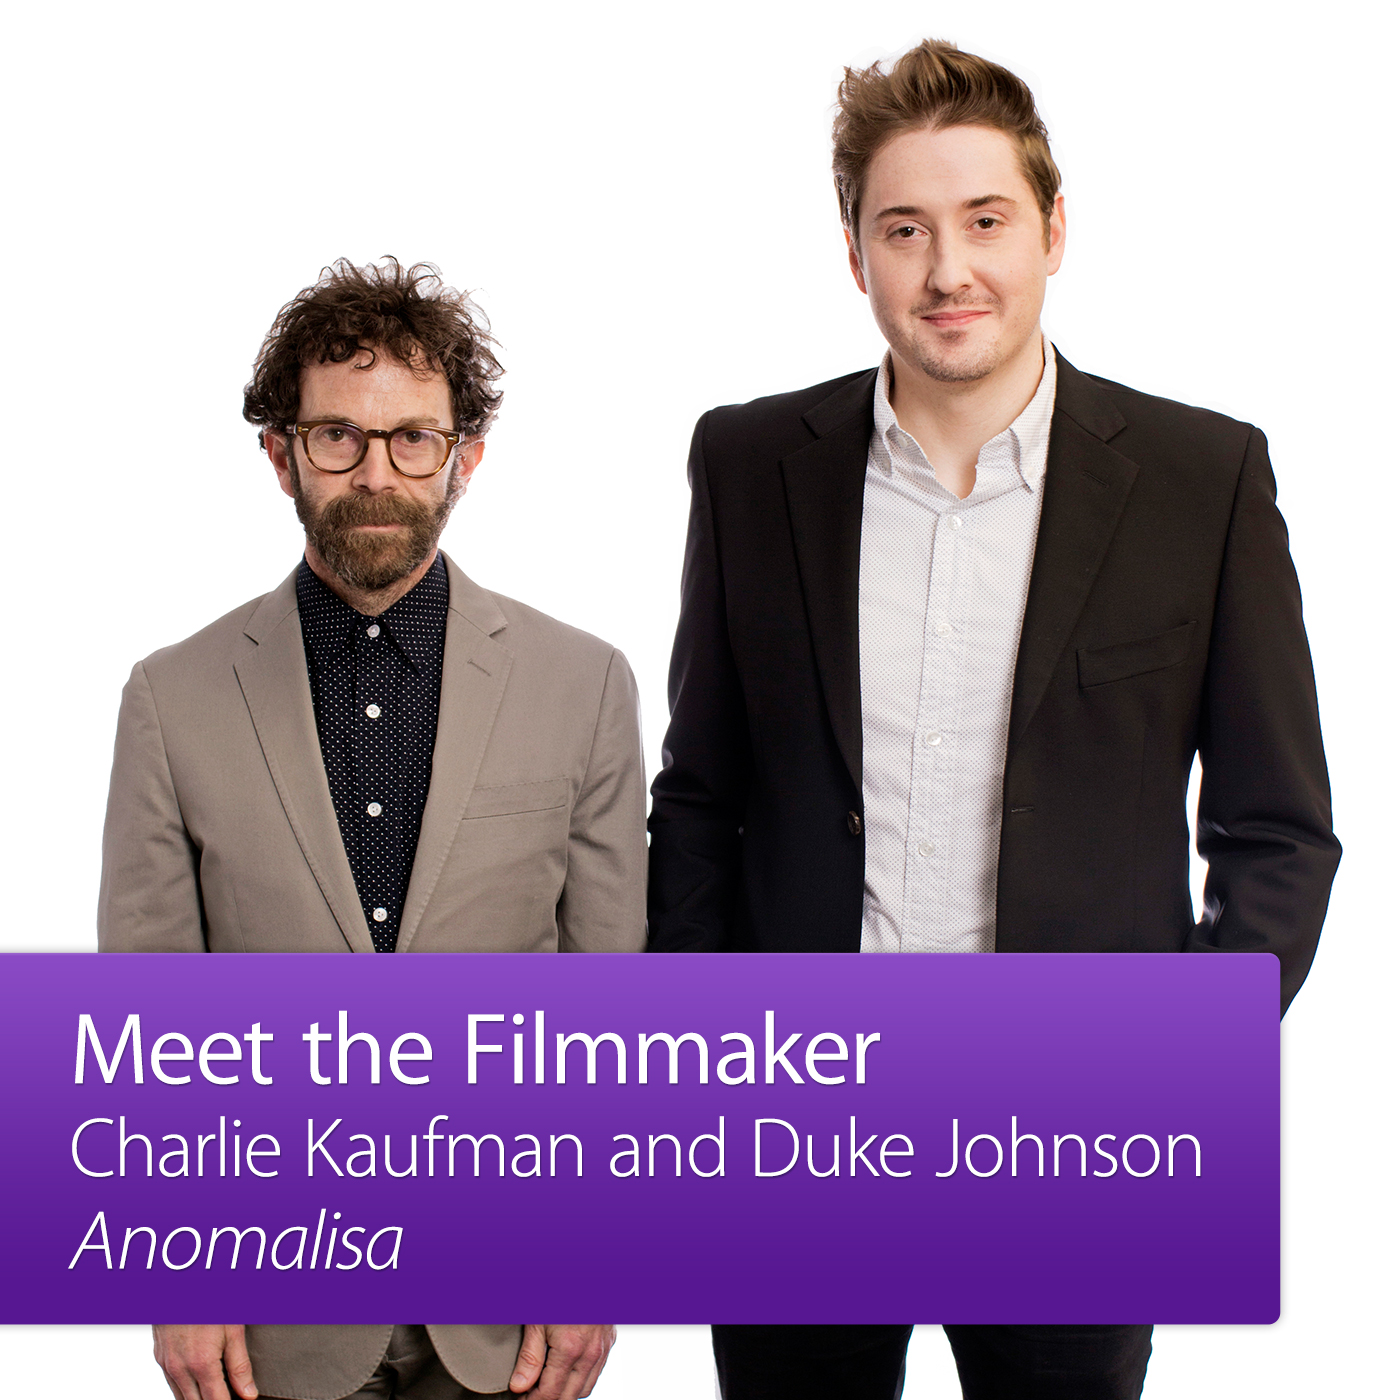 Anomalisa: Meet the Filmmaker